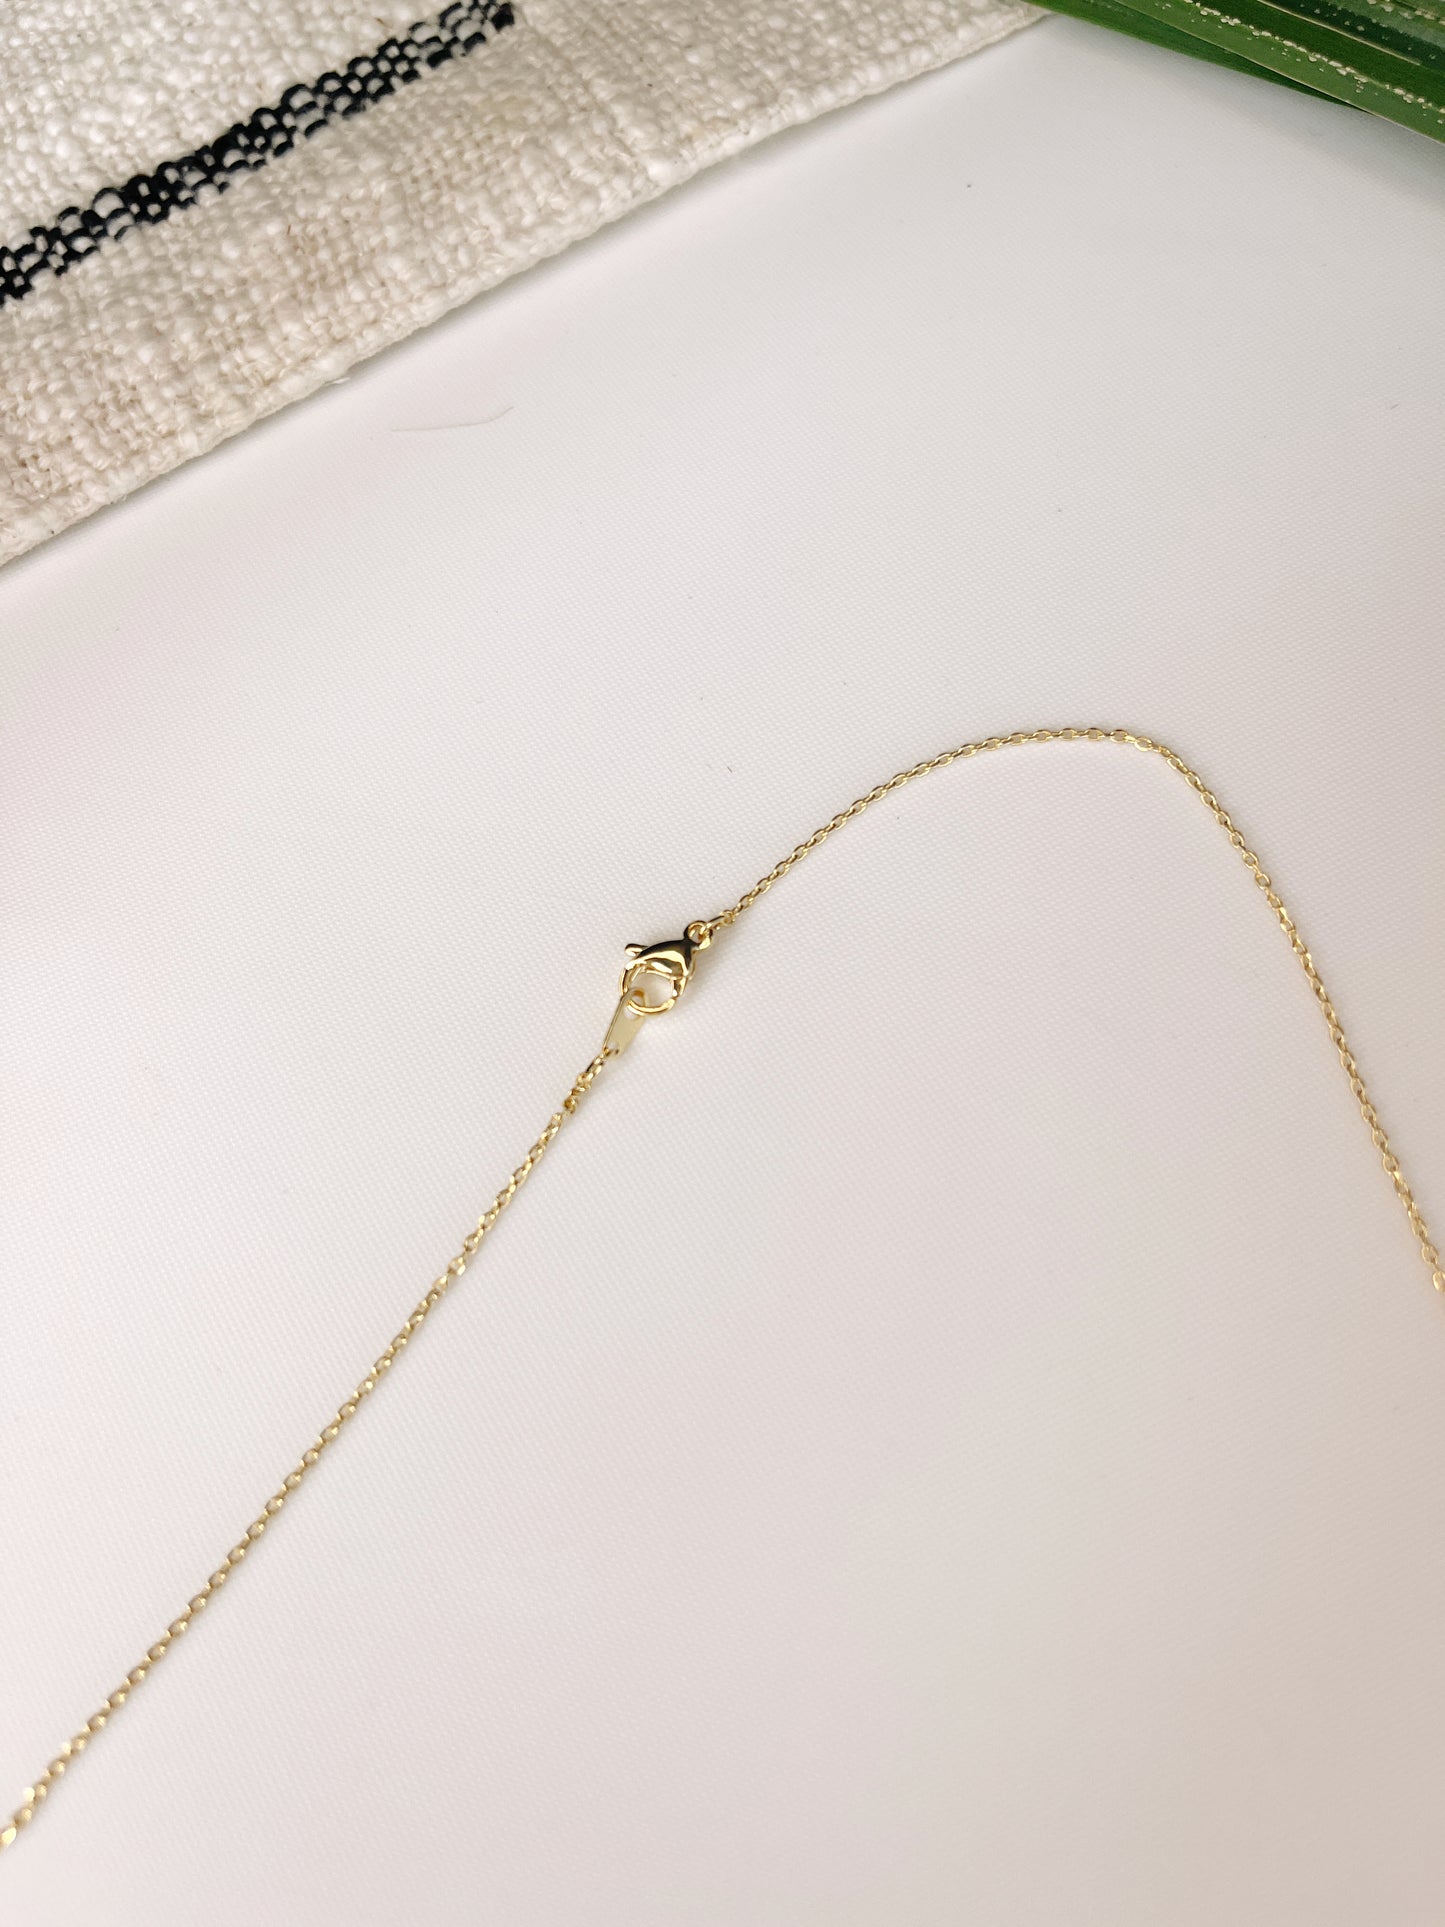 "Nila" simple opal necklace